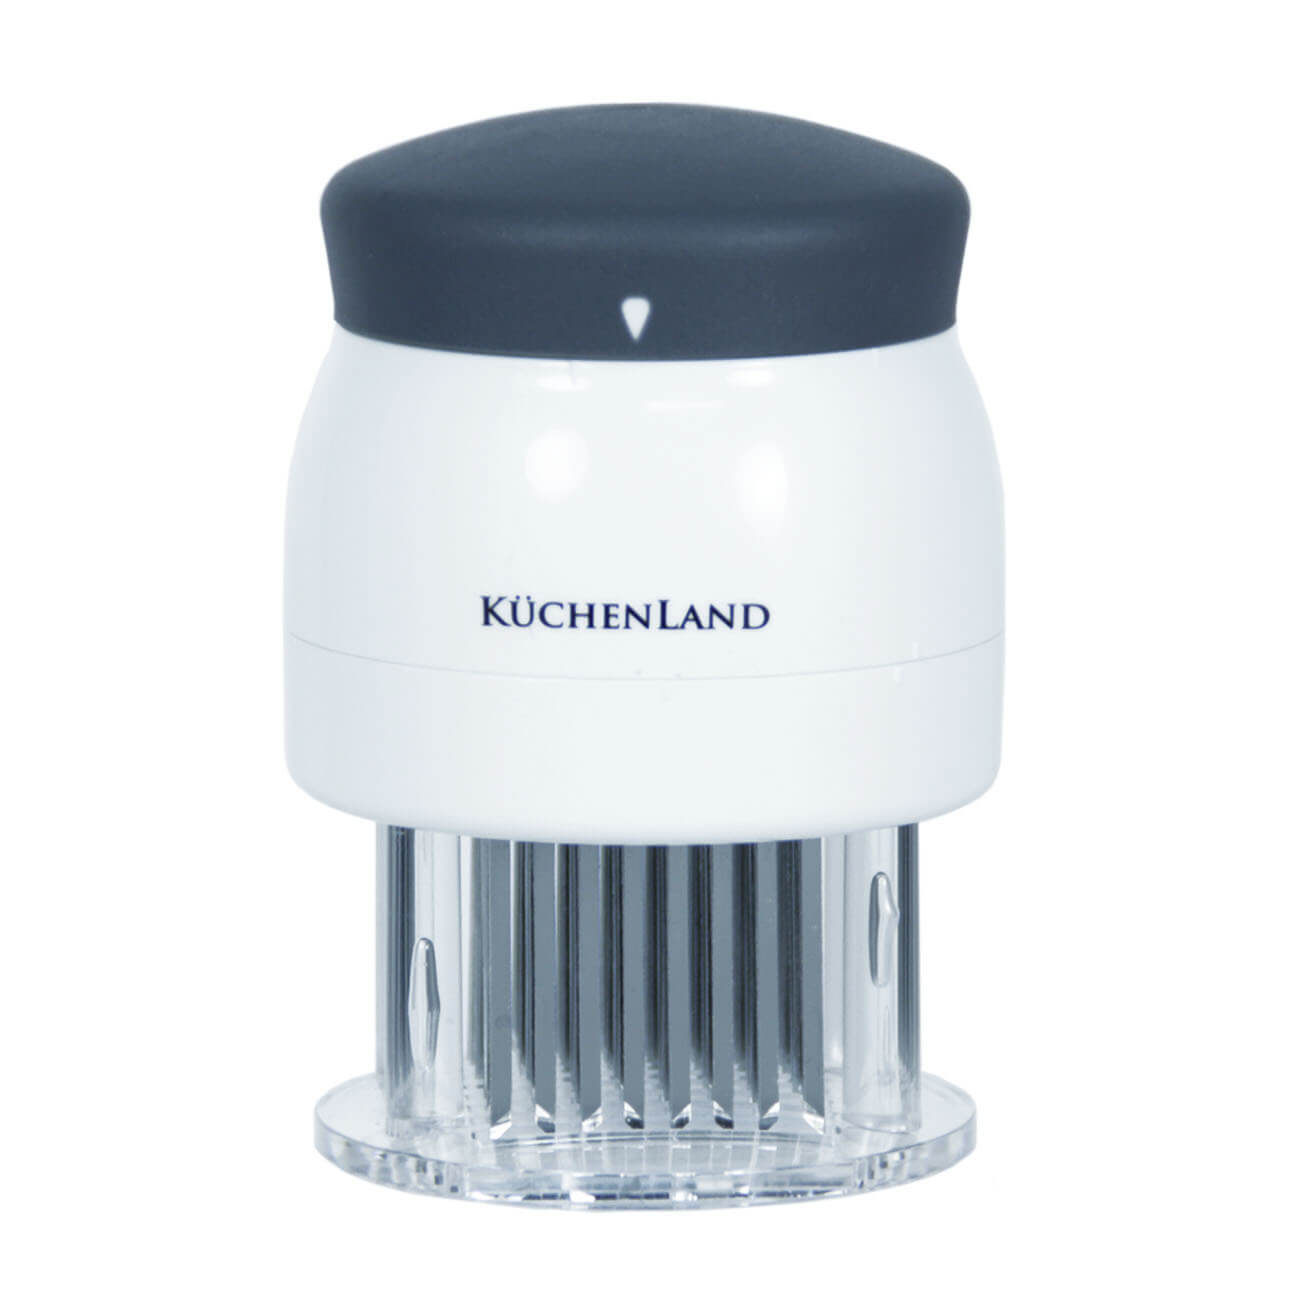 Kuchenland Тендерайзер, 8х11 см, 72 лезвия, сталь/пластик, белый, Grinding лезвия olfa